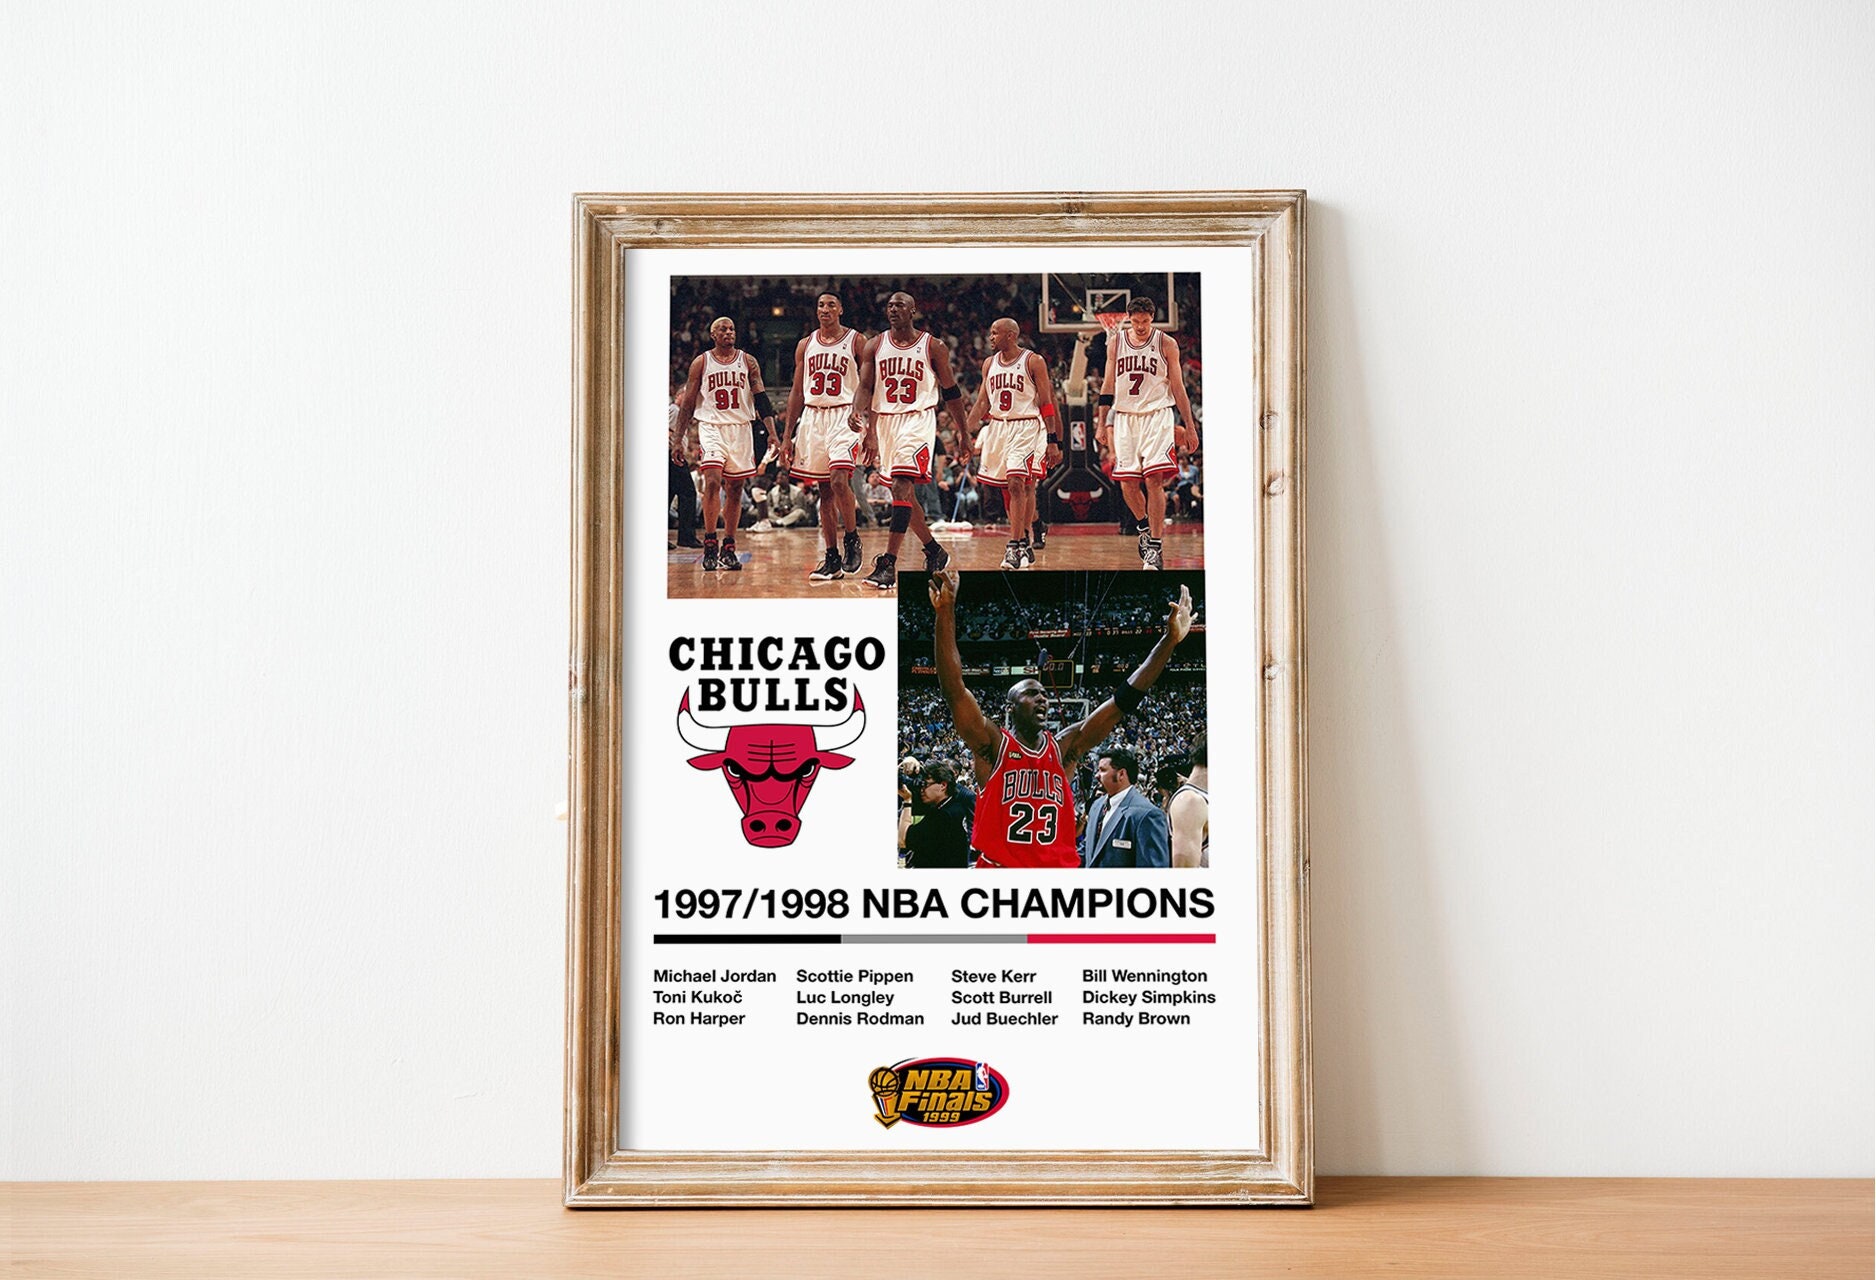 Trends International Chicago Bulls Champions Framed Wall Poster